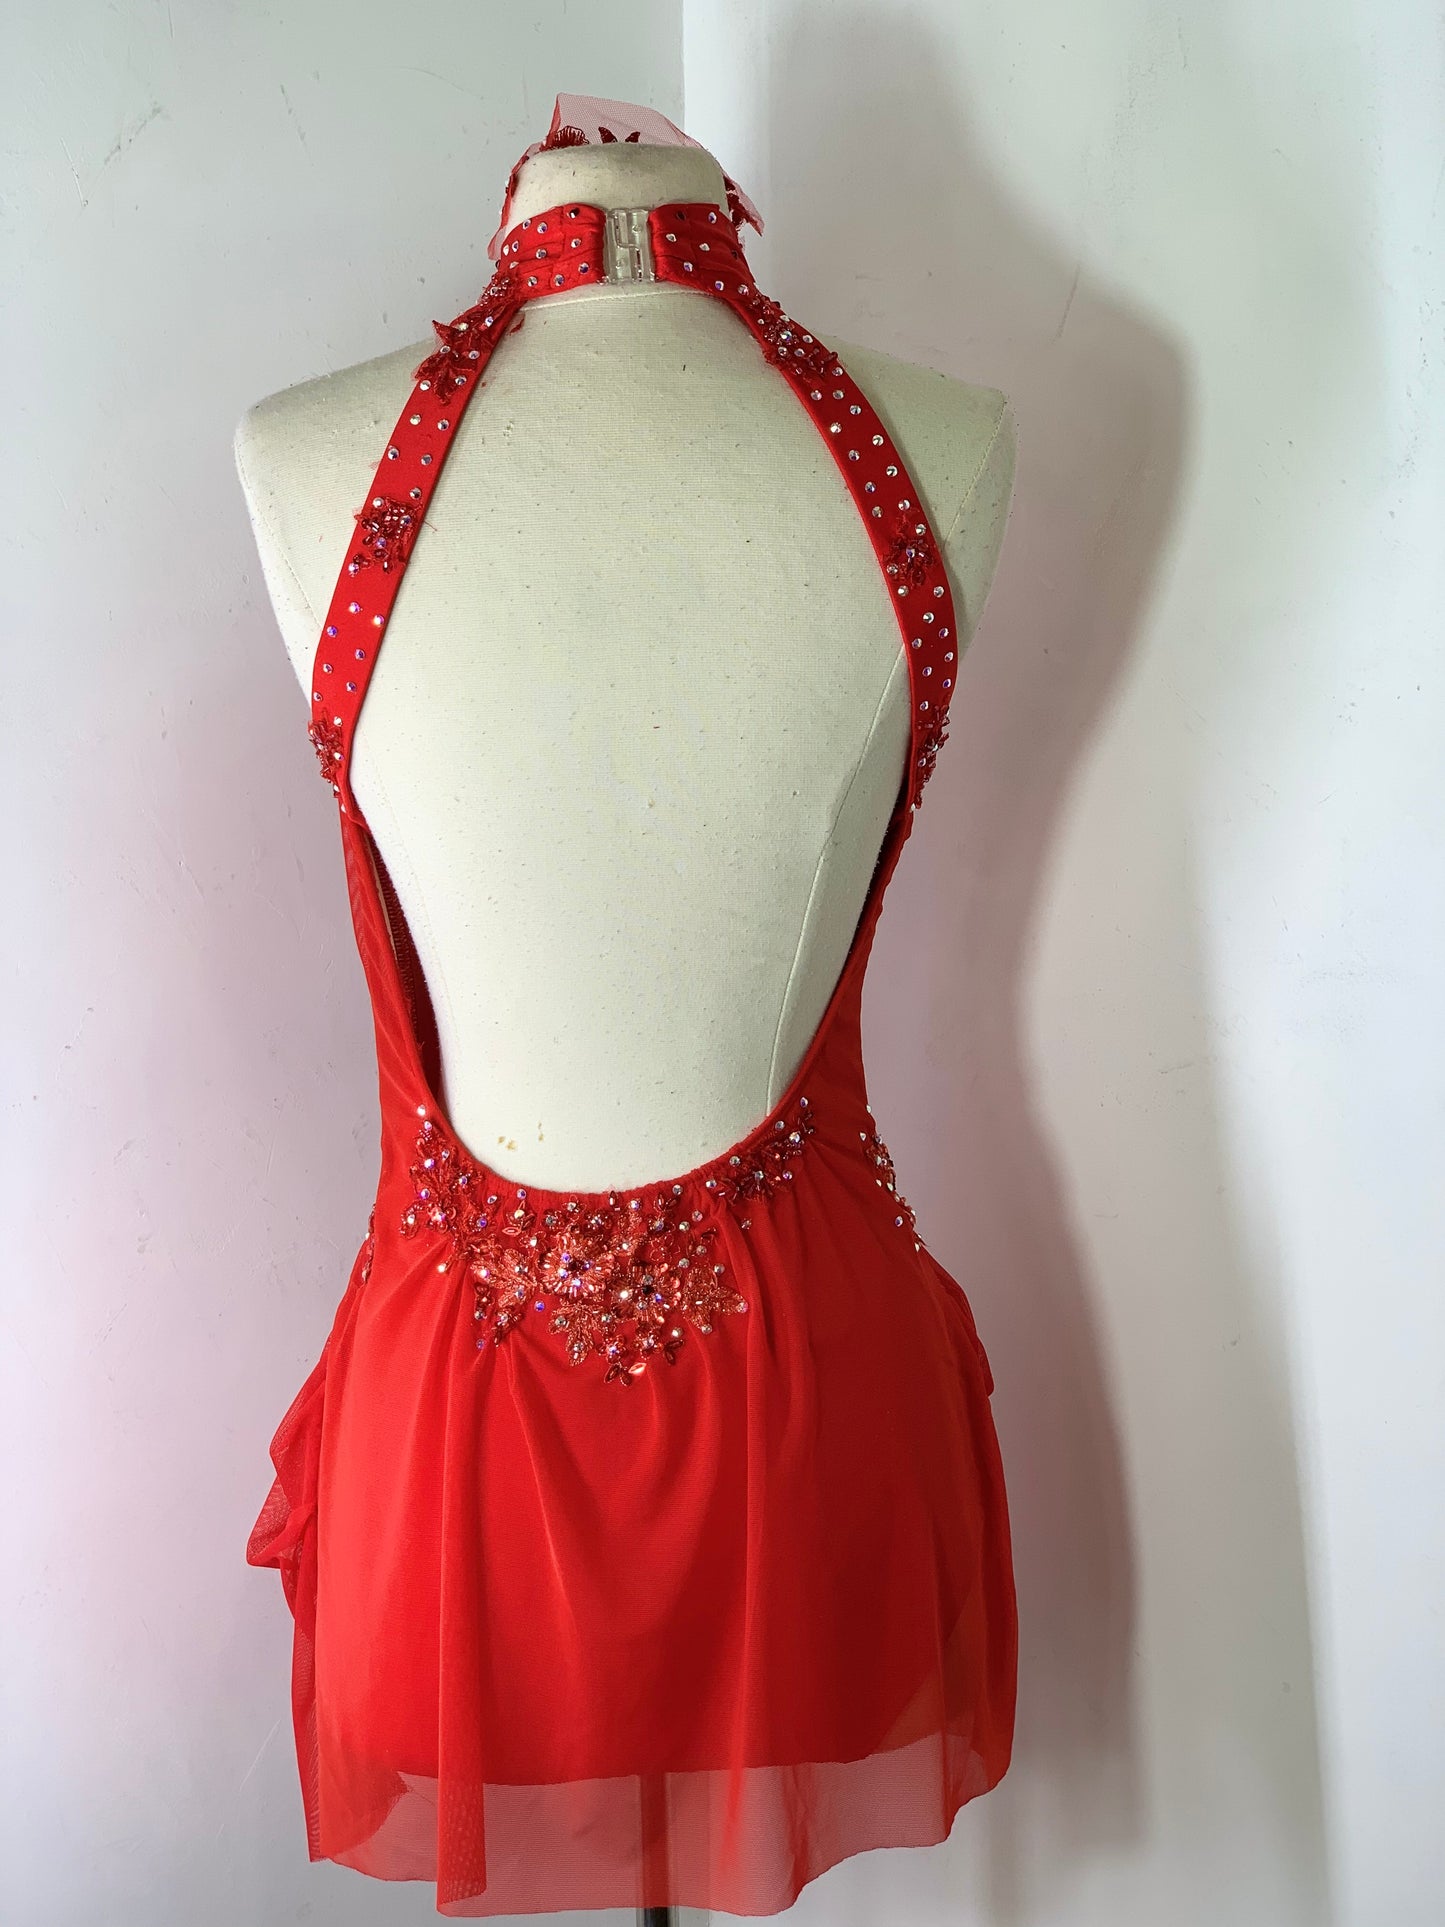 Draped red dance dress